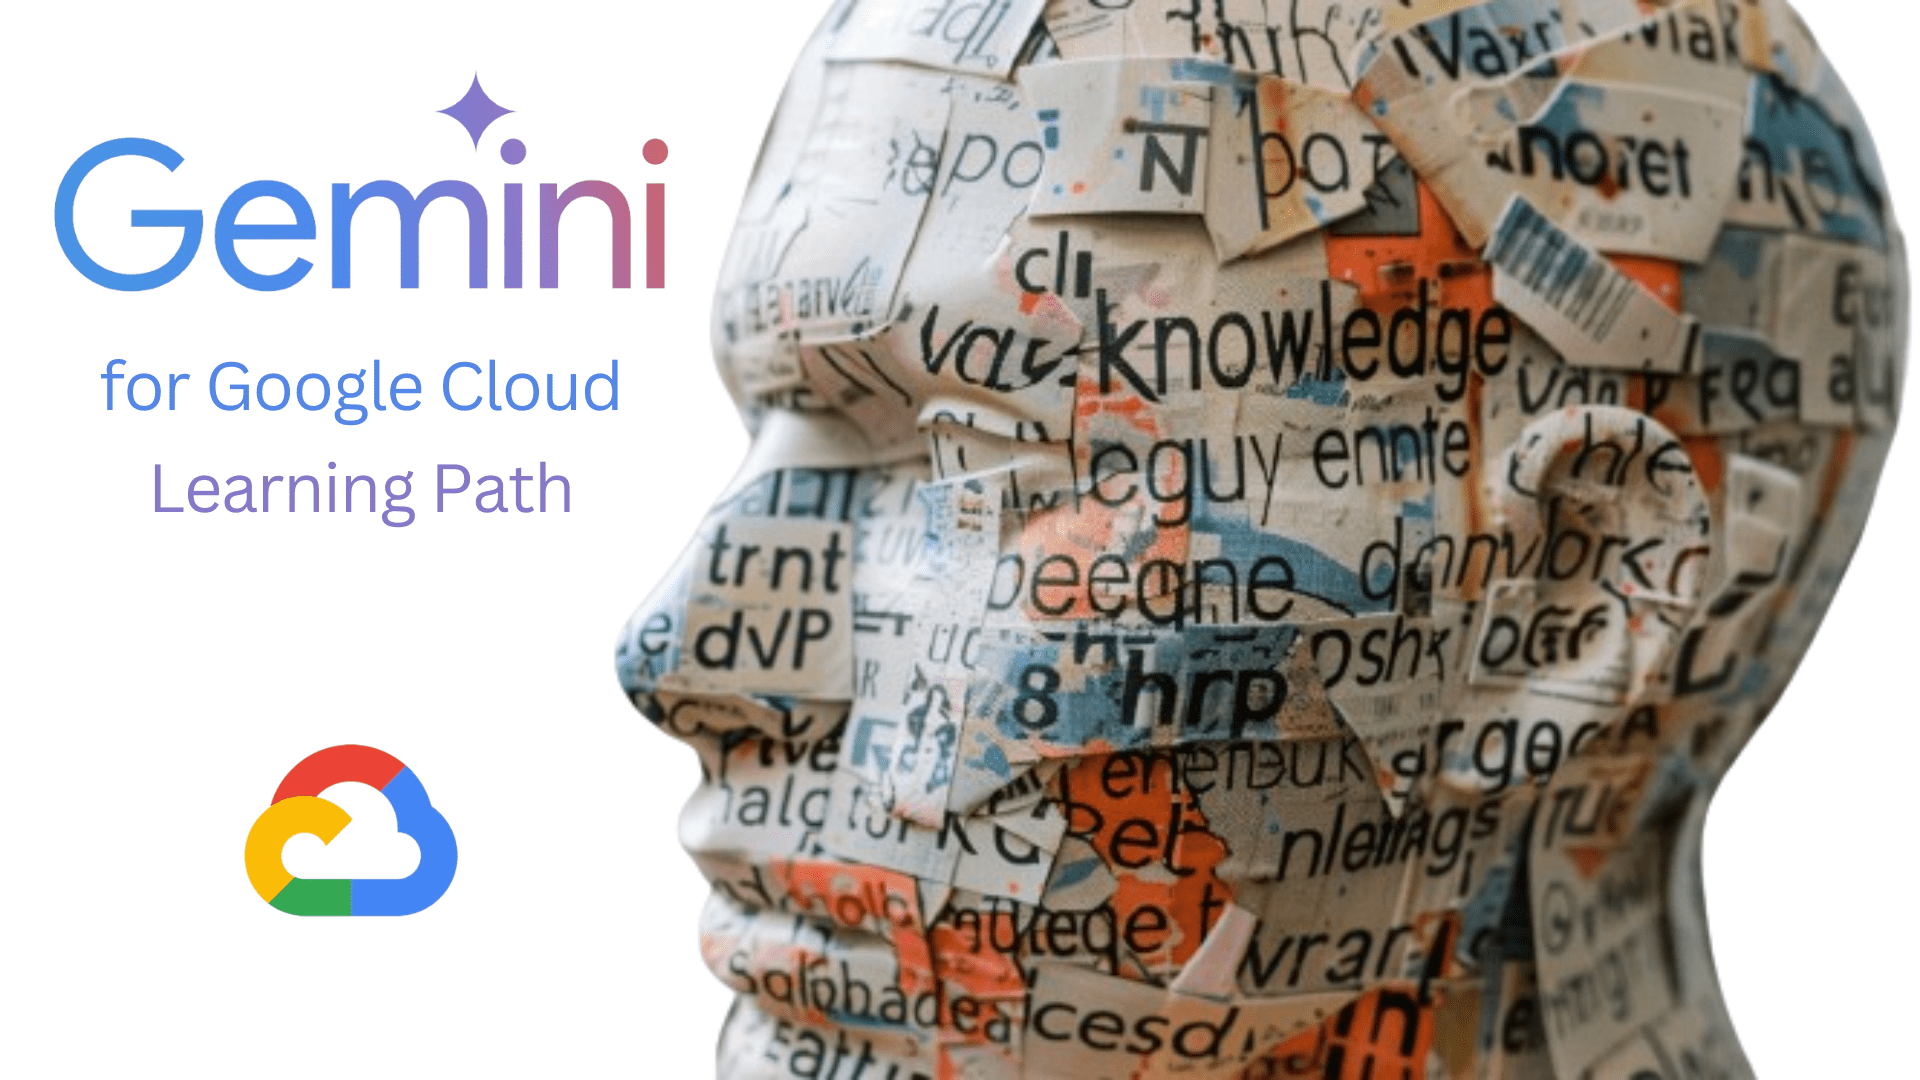 Gemini learning path for Google Cloud